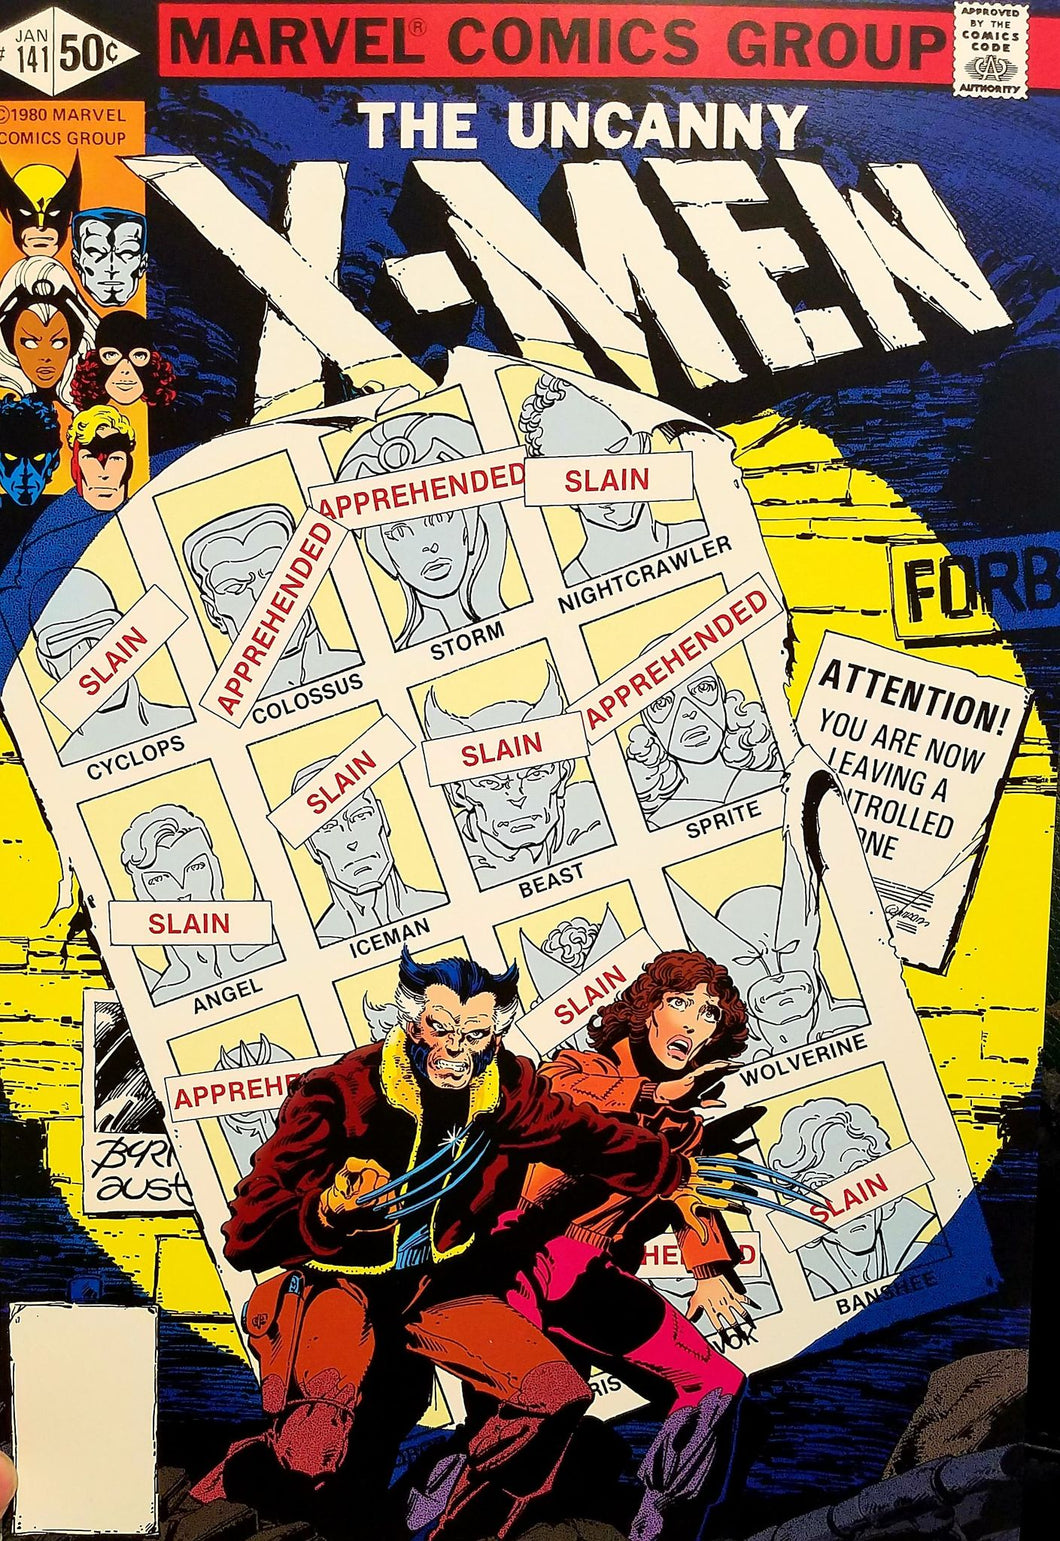 Uncanny X-Men #141 16x11 Art Print by John Byrne (Days of Future Past), New Marvel Comics cardstock